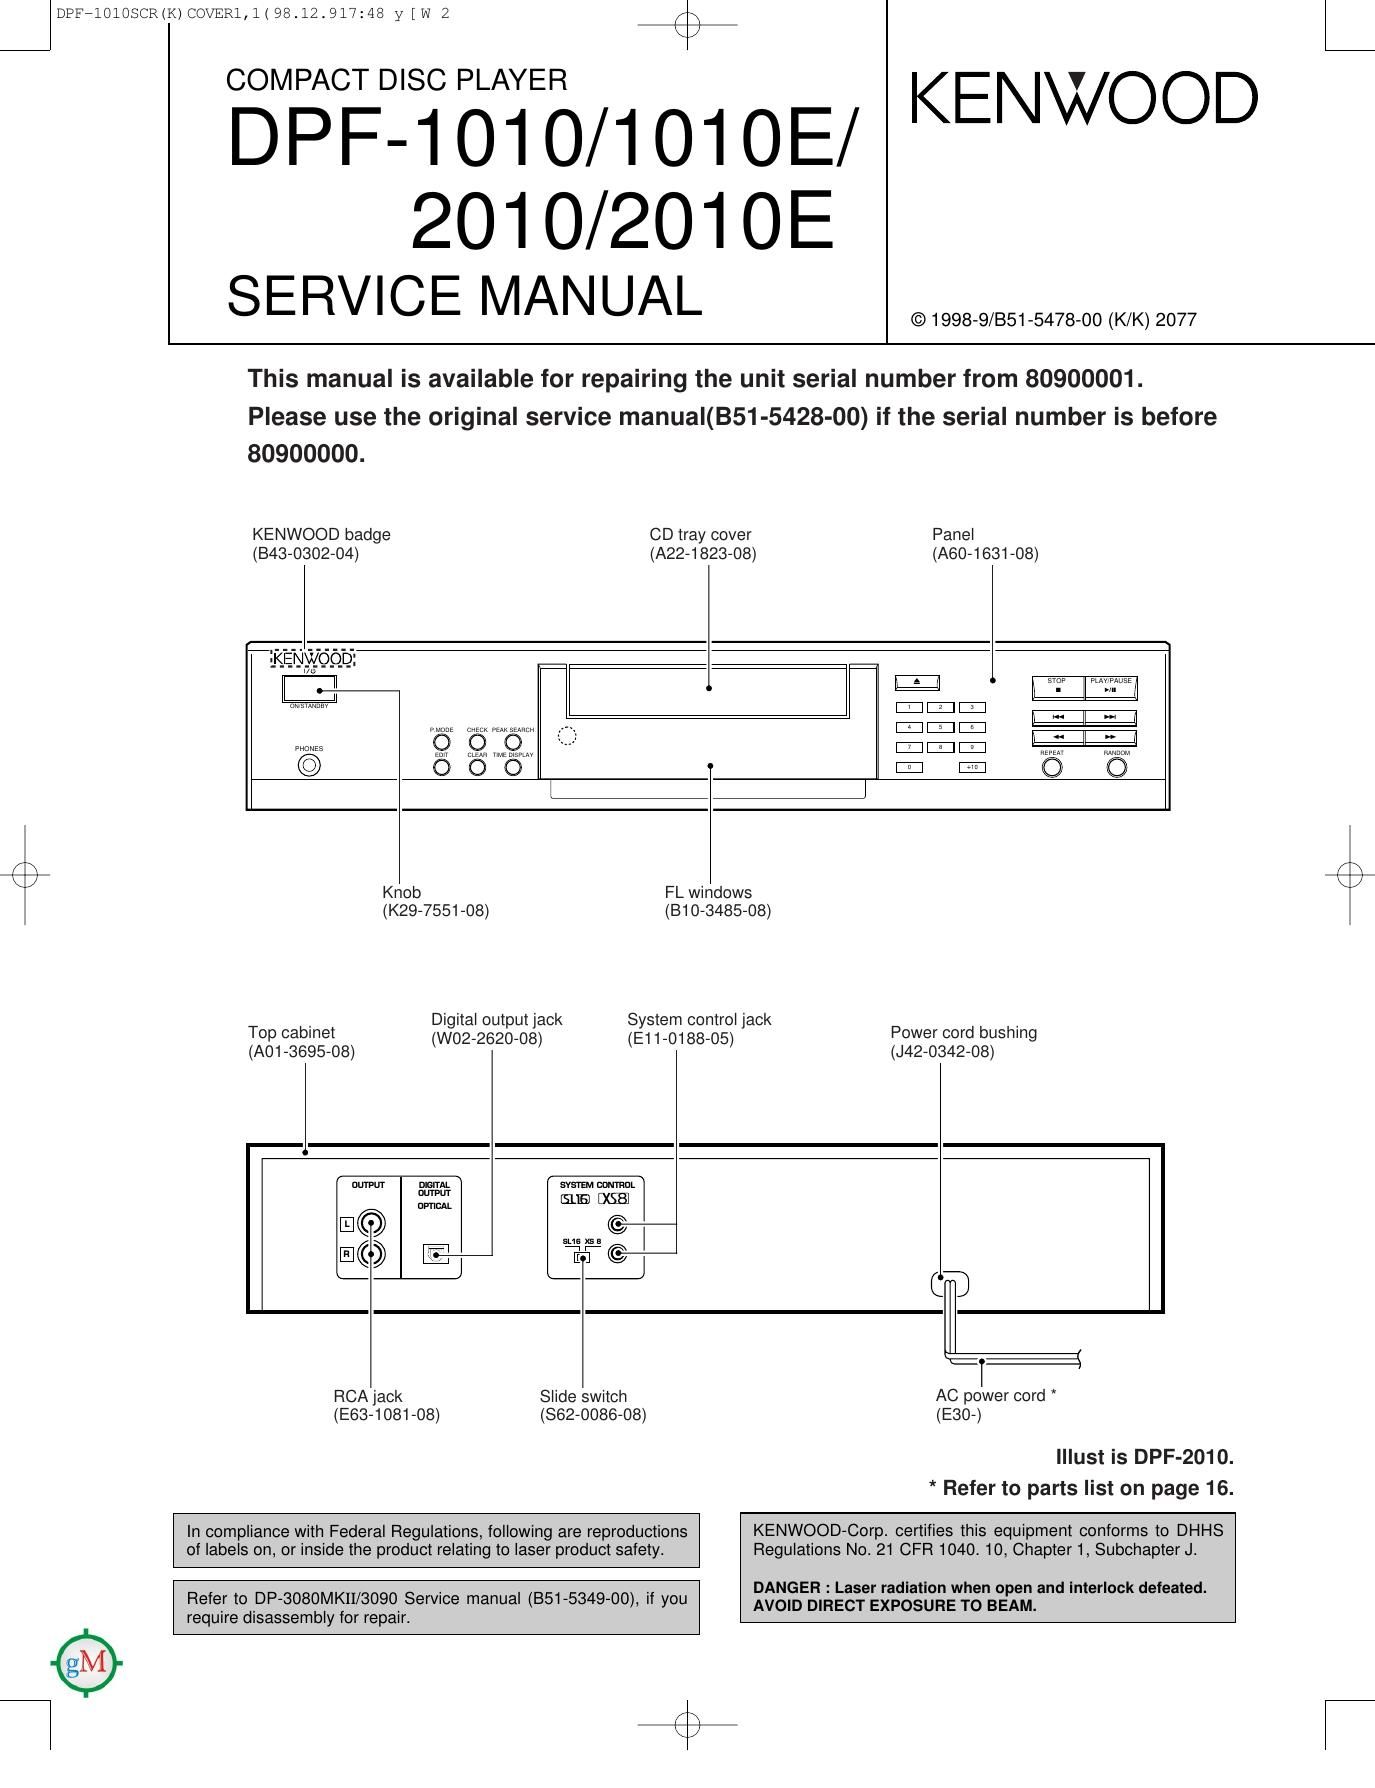 Kenwood DPF 2010 Service Manual